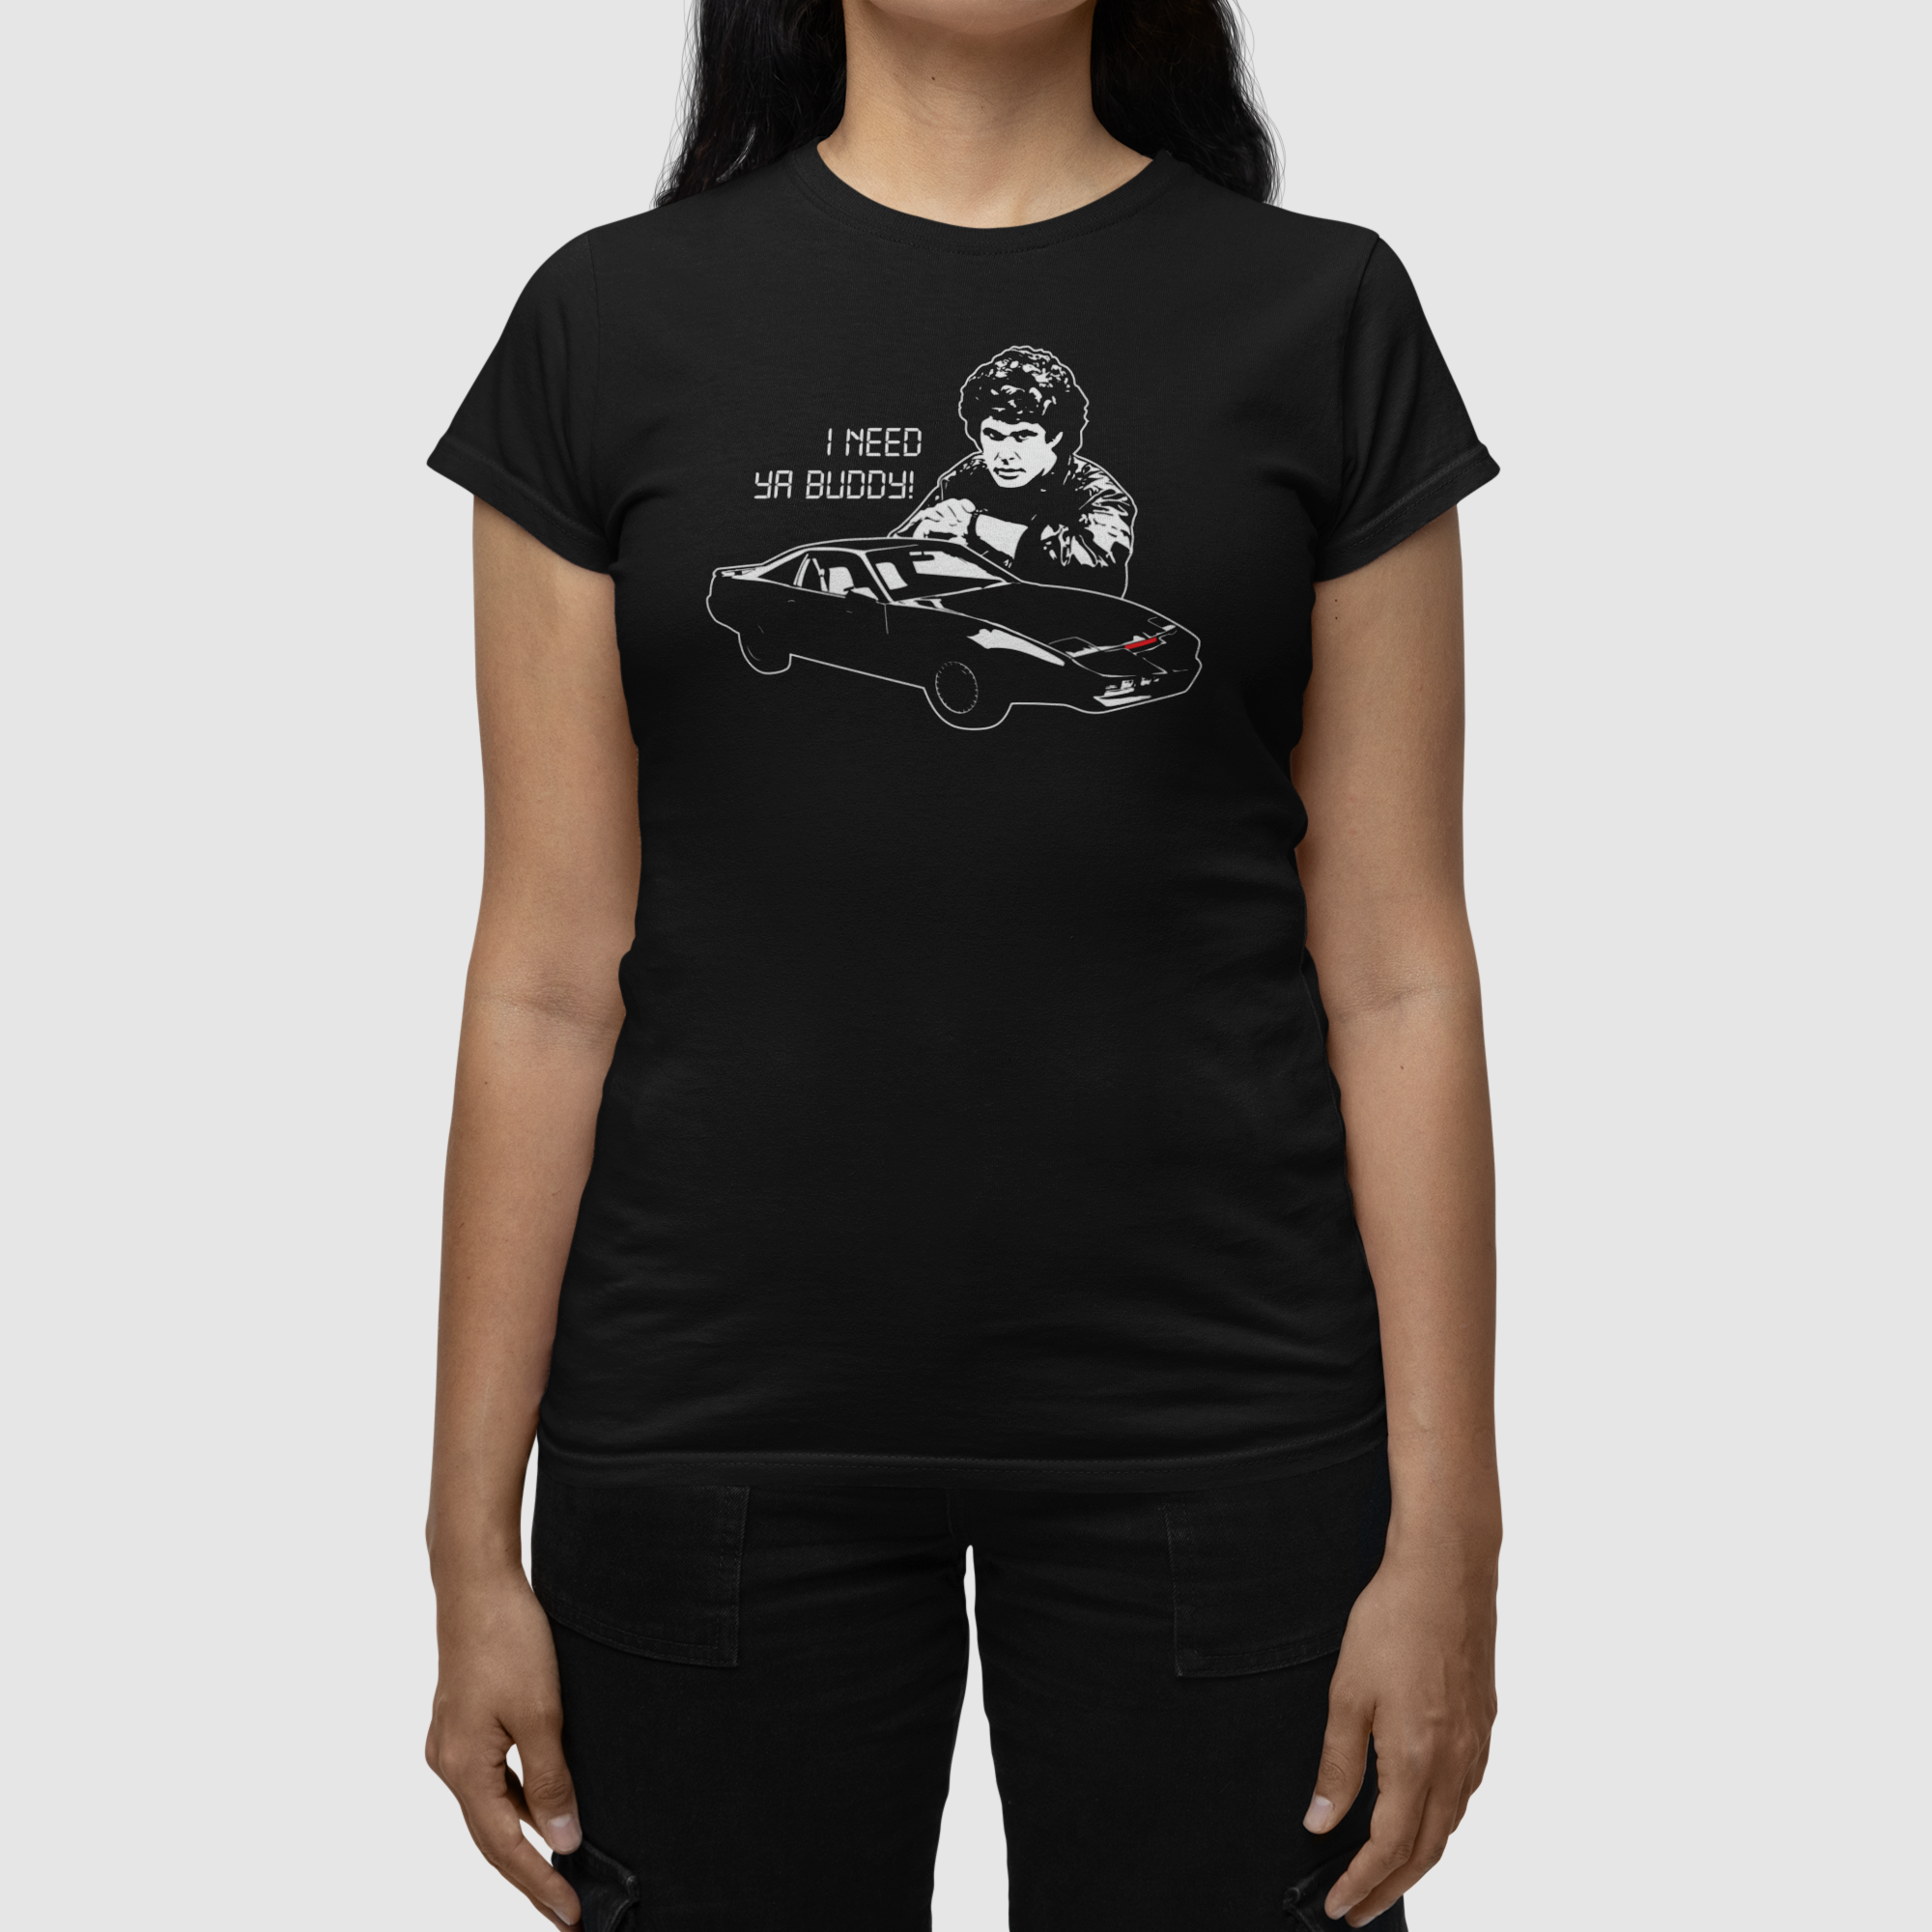 T-Shirt David Hasselhoff Knight Rider Serienshirt schwarz E55